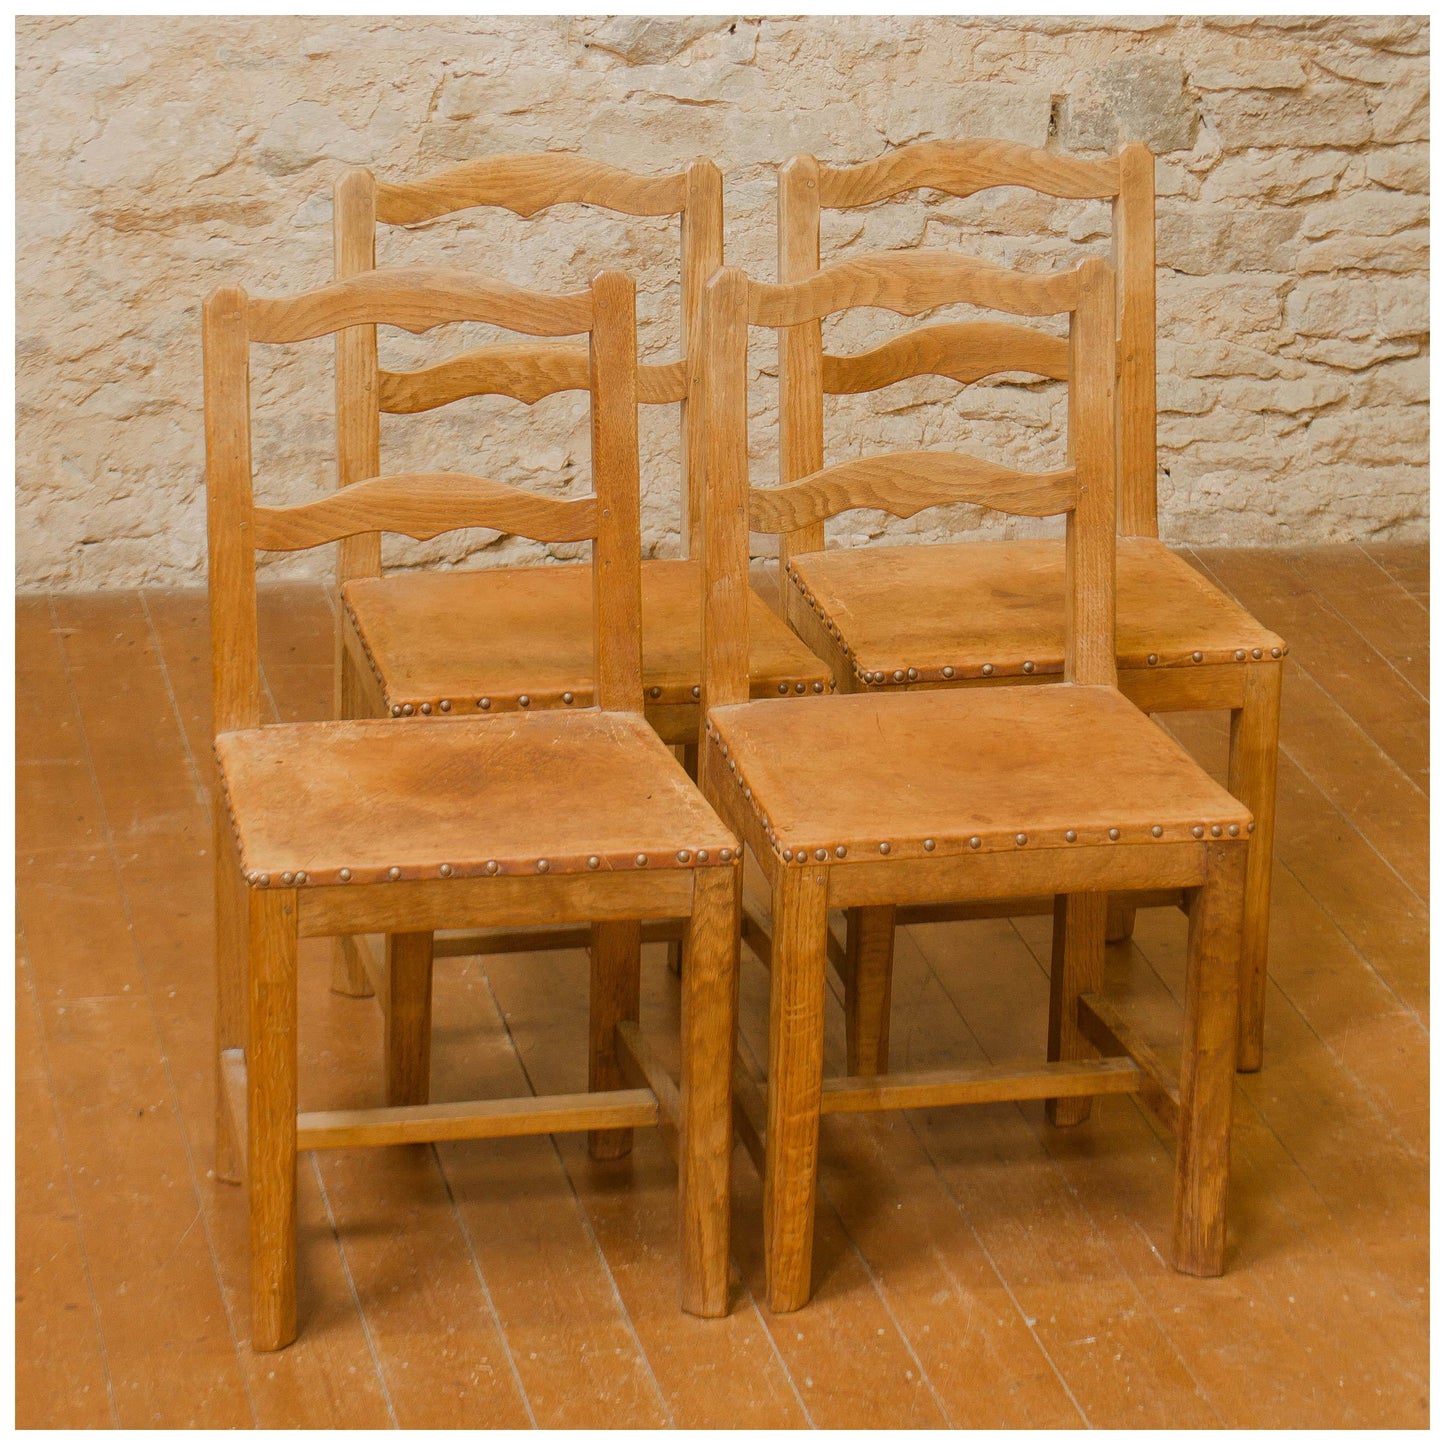 Robert Kingpost Ingham Arts & Crafts Yorkshire School English Oak English Chairs